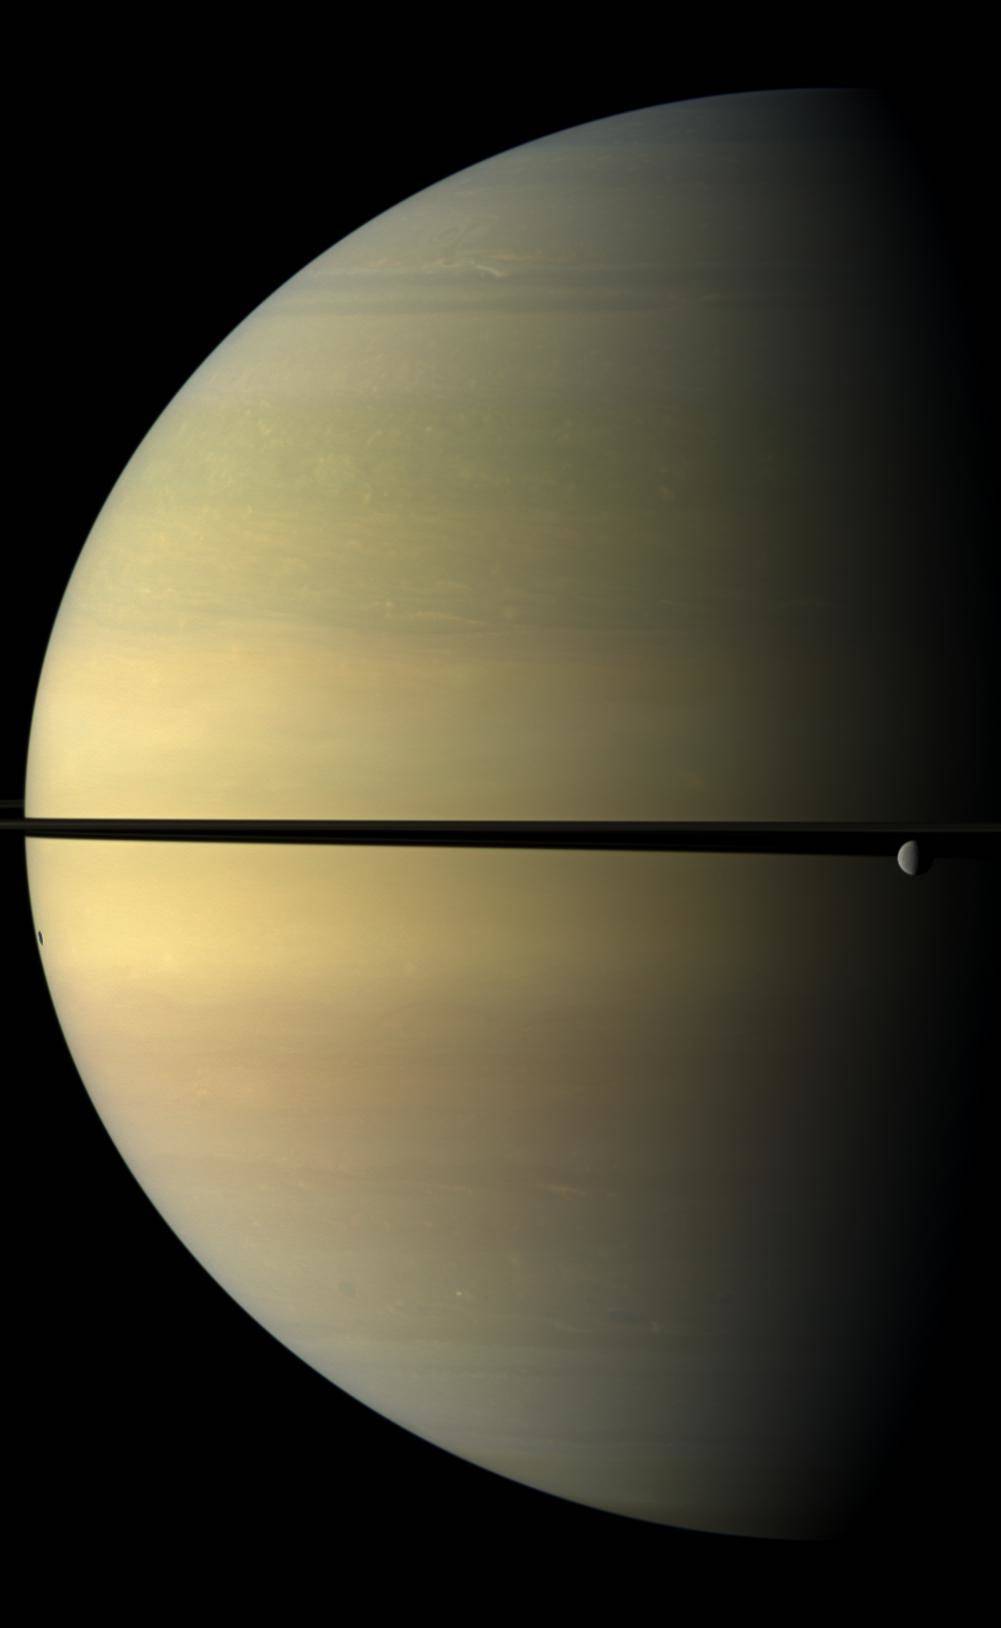 Stately Saturn